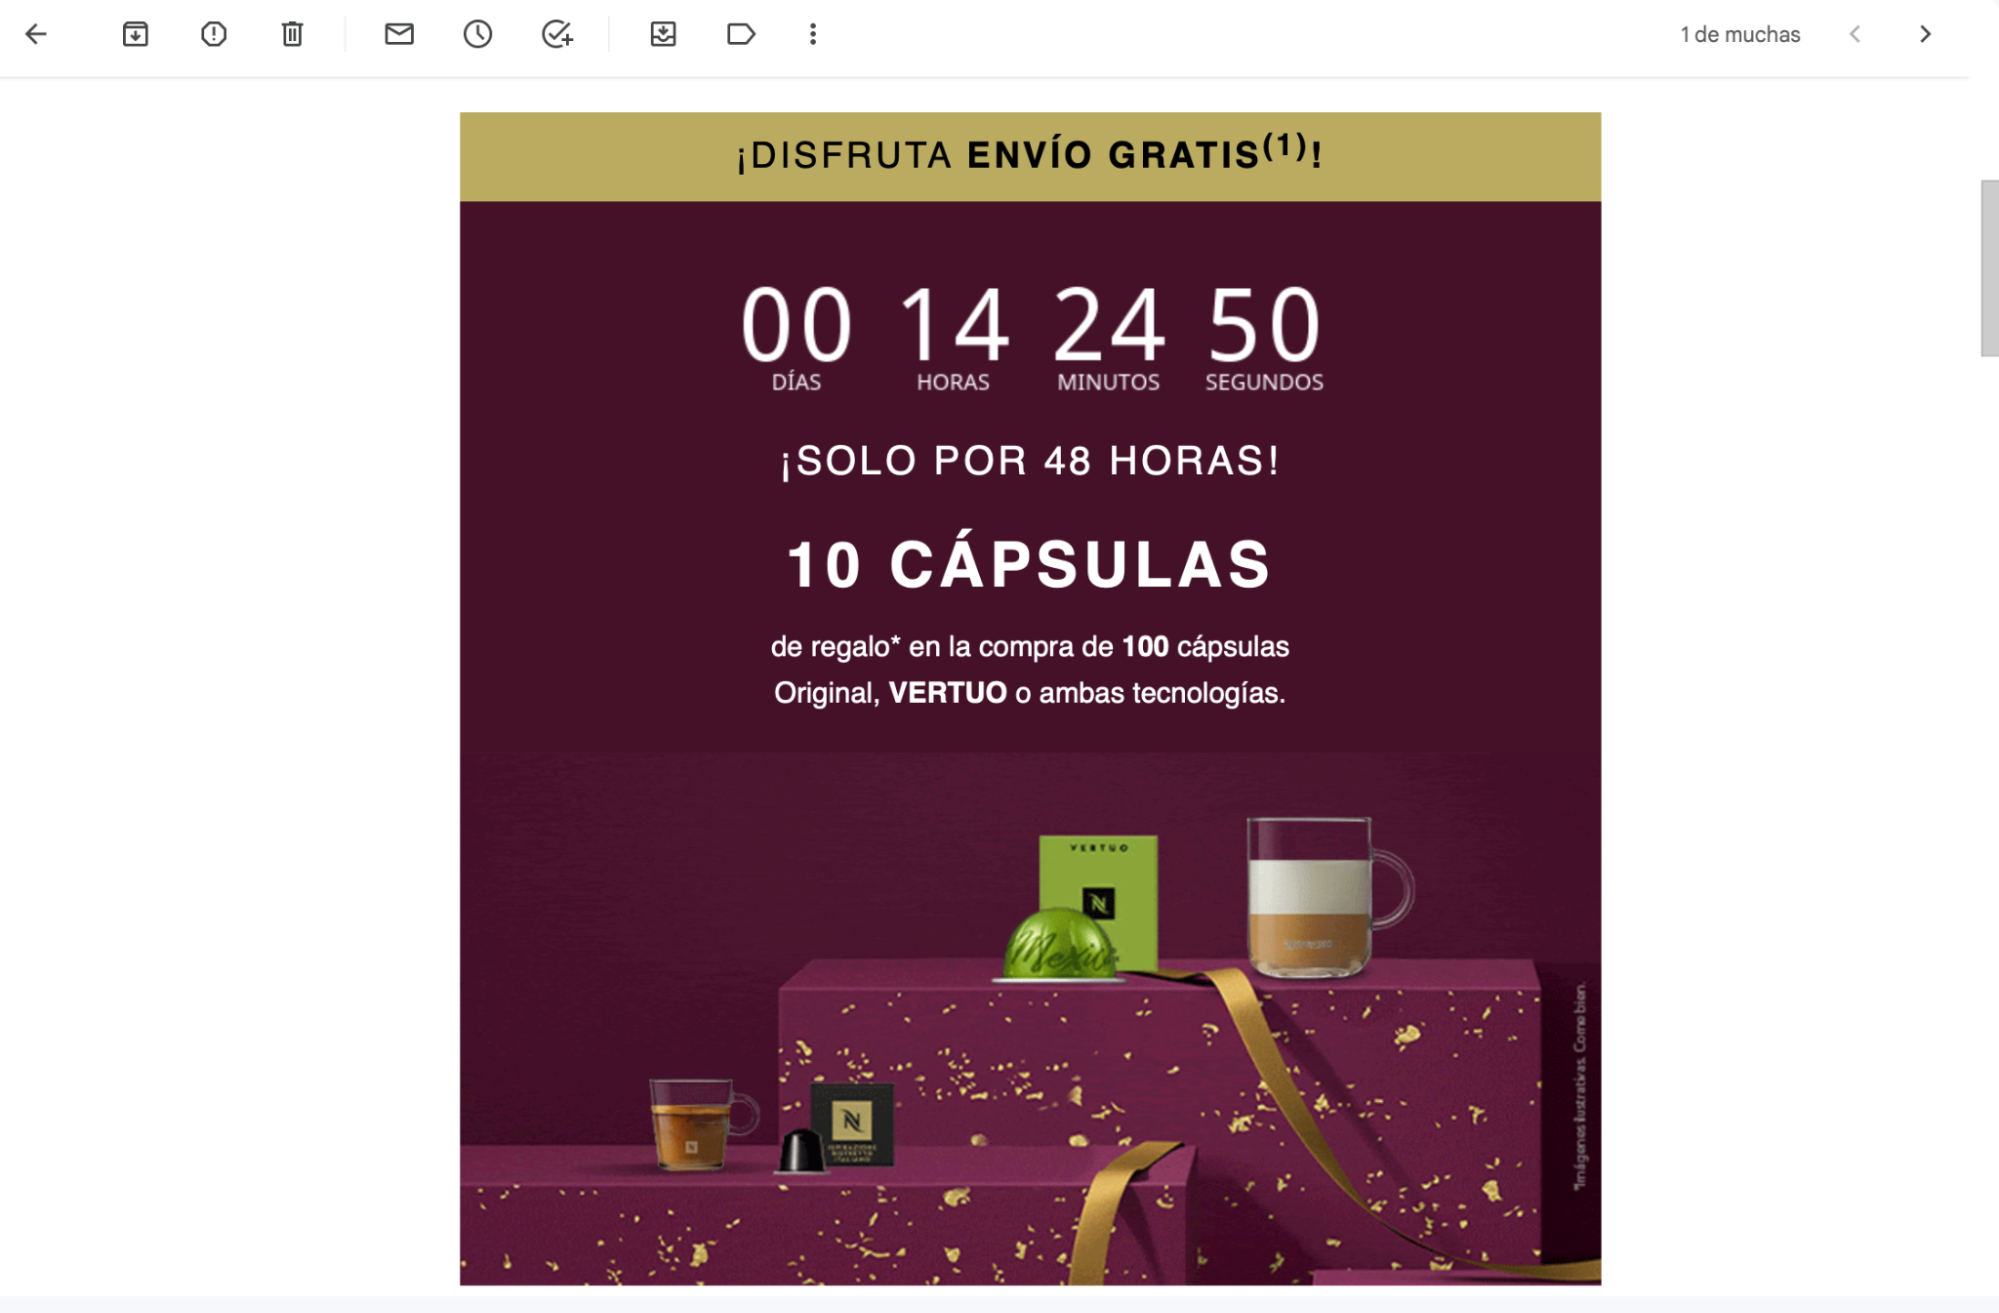 Campaña navideña de email marketing de Nespresso